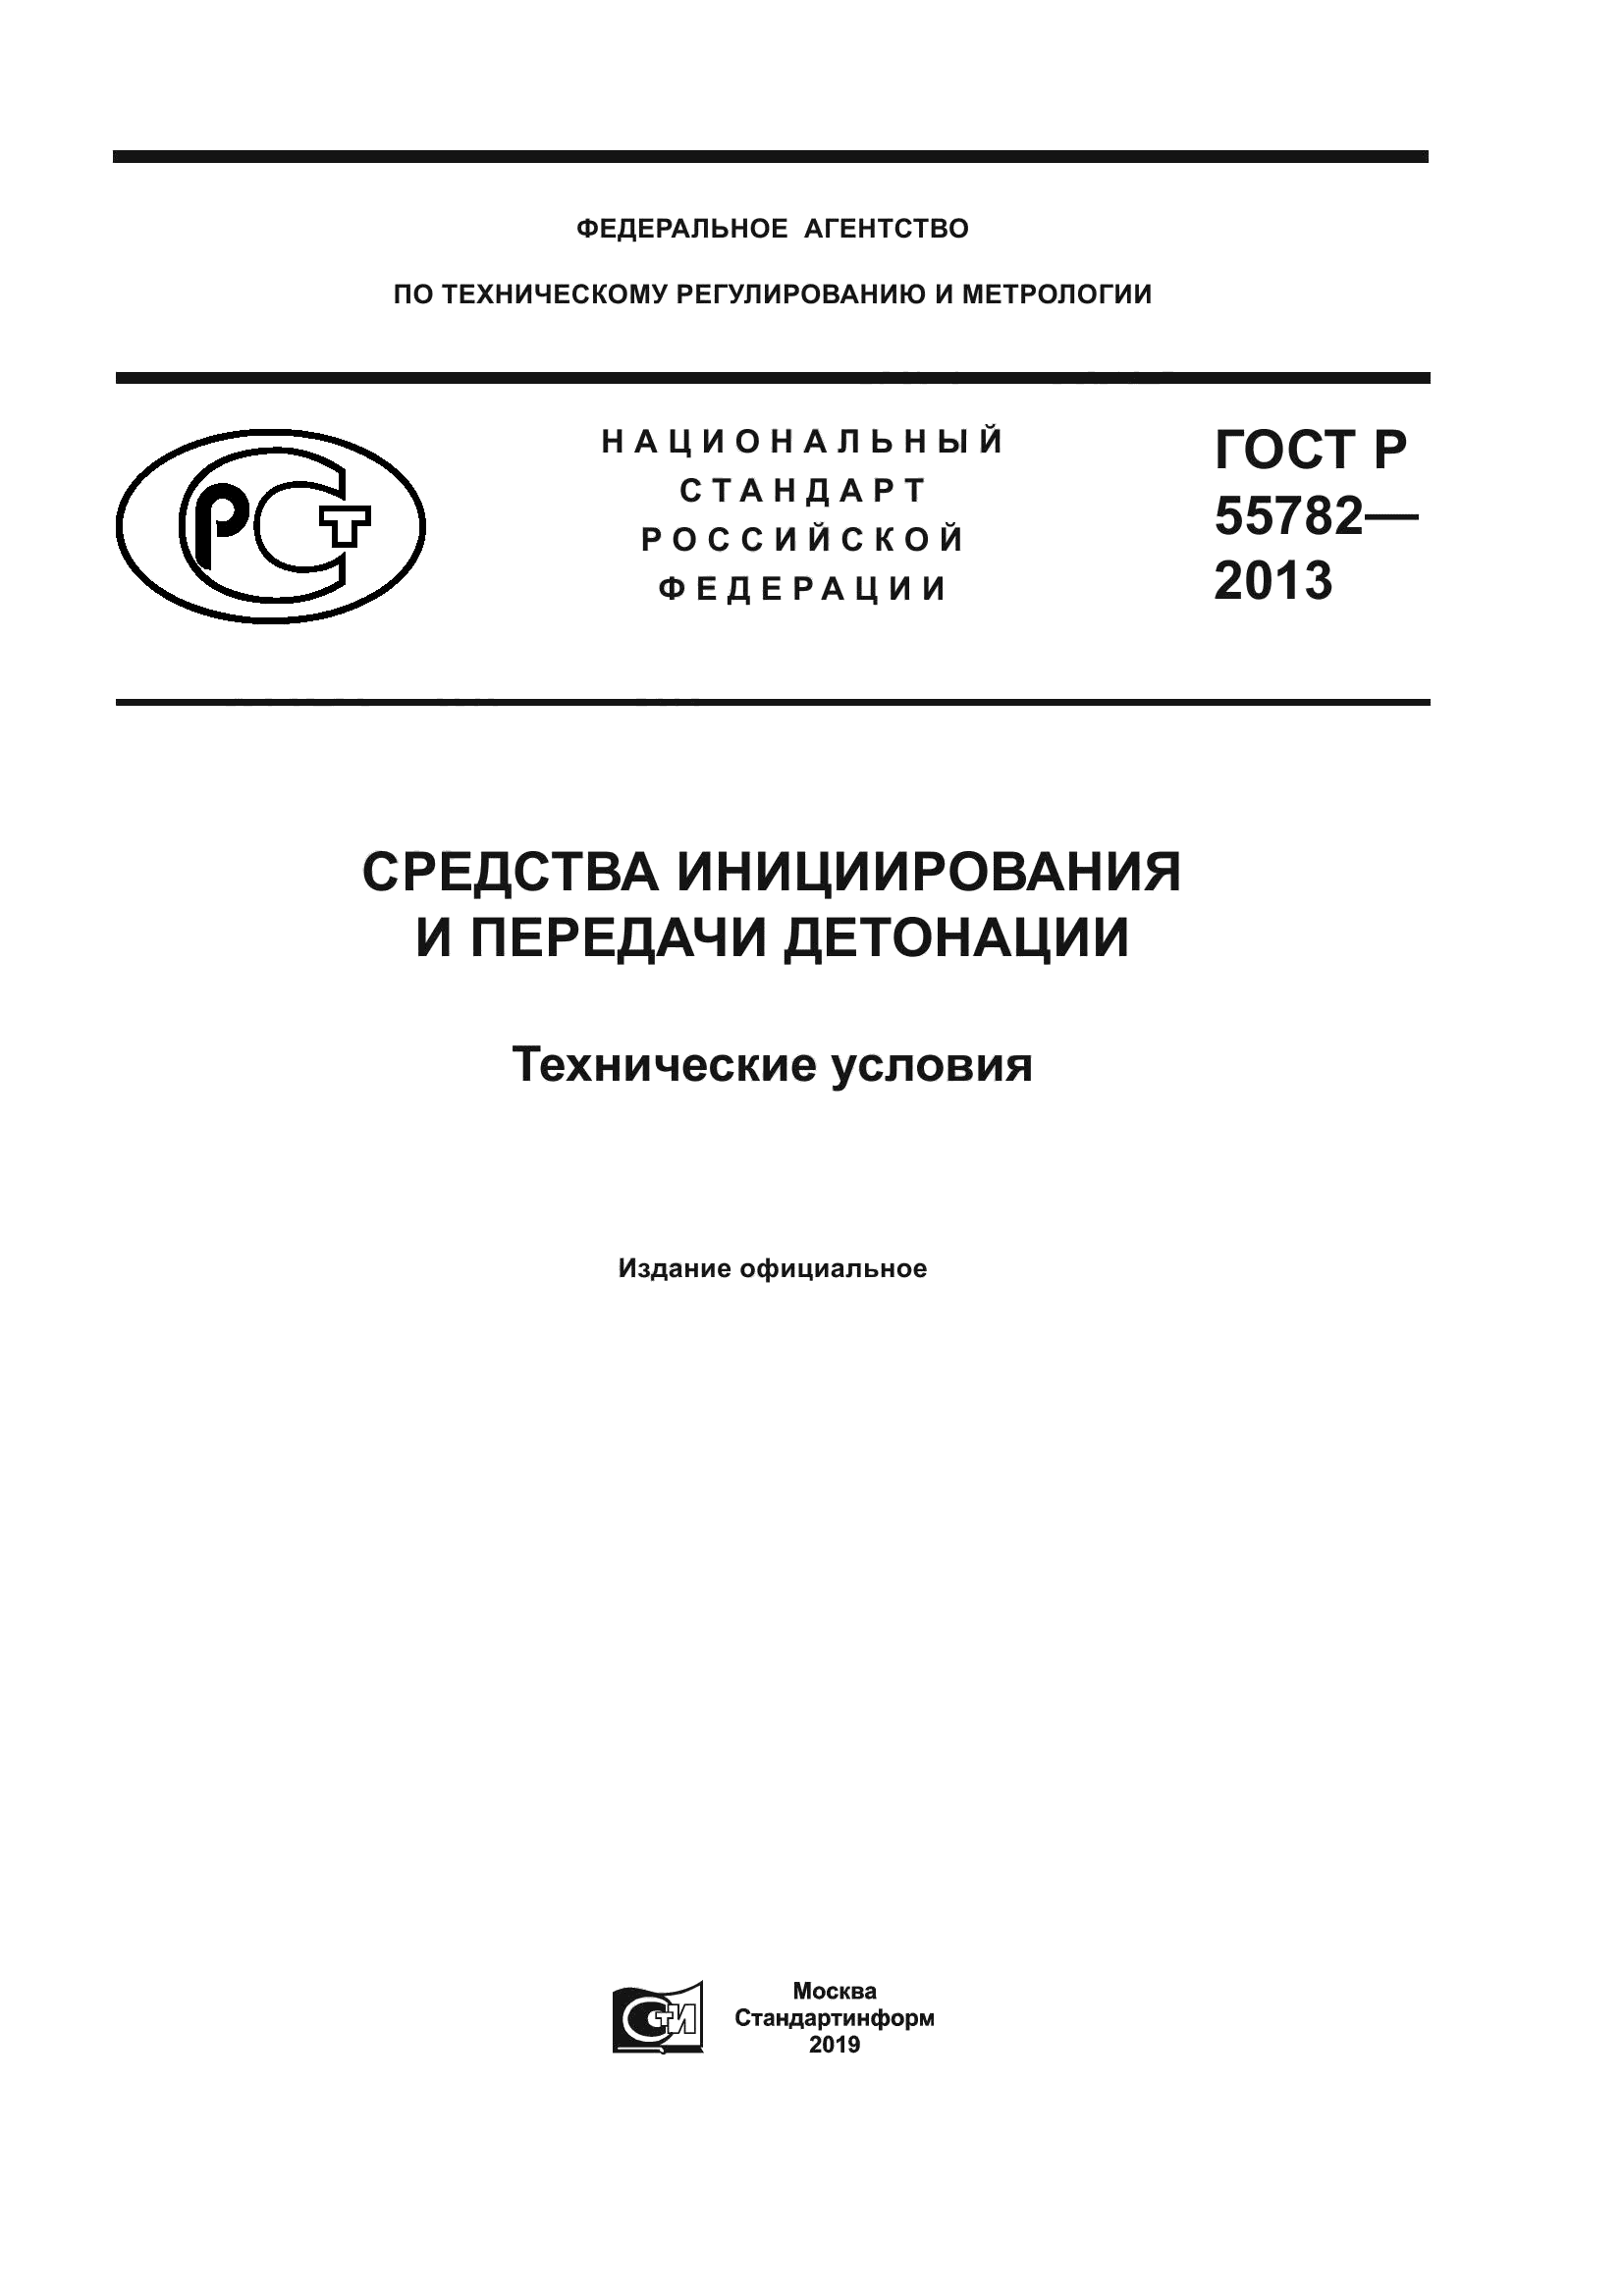 ГОСТ Р 55782-2013